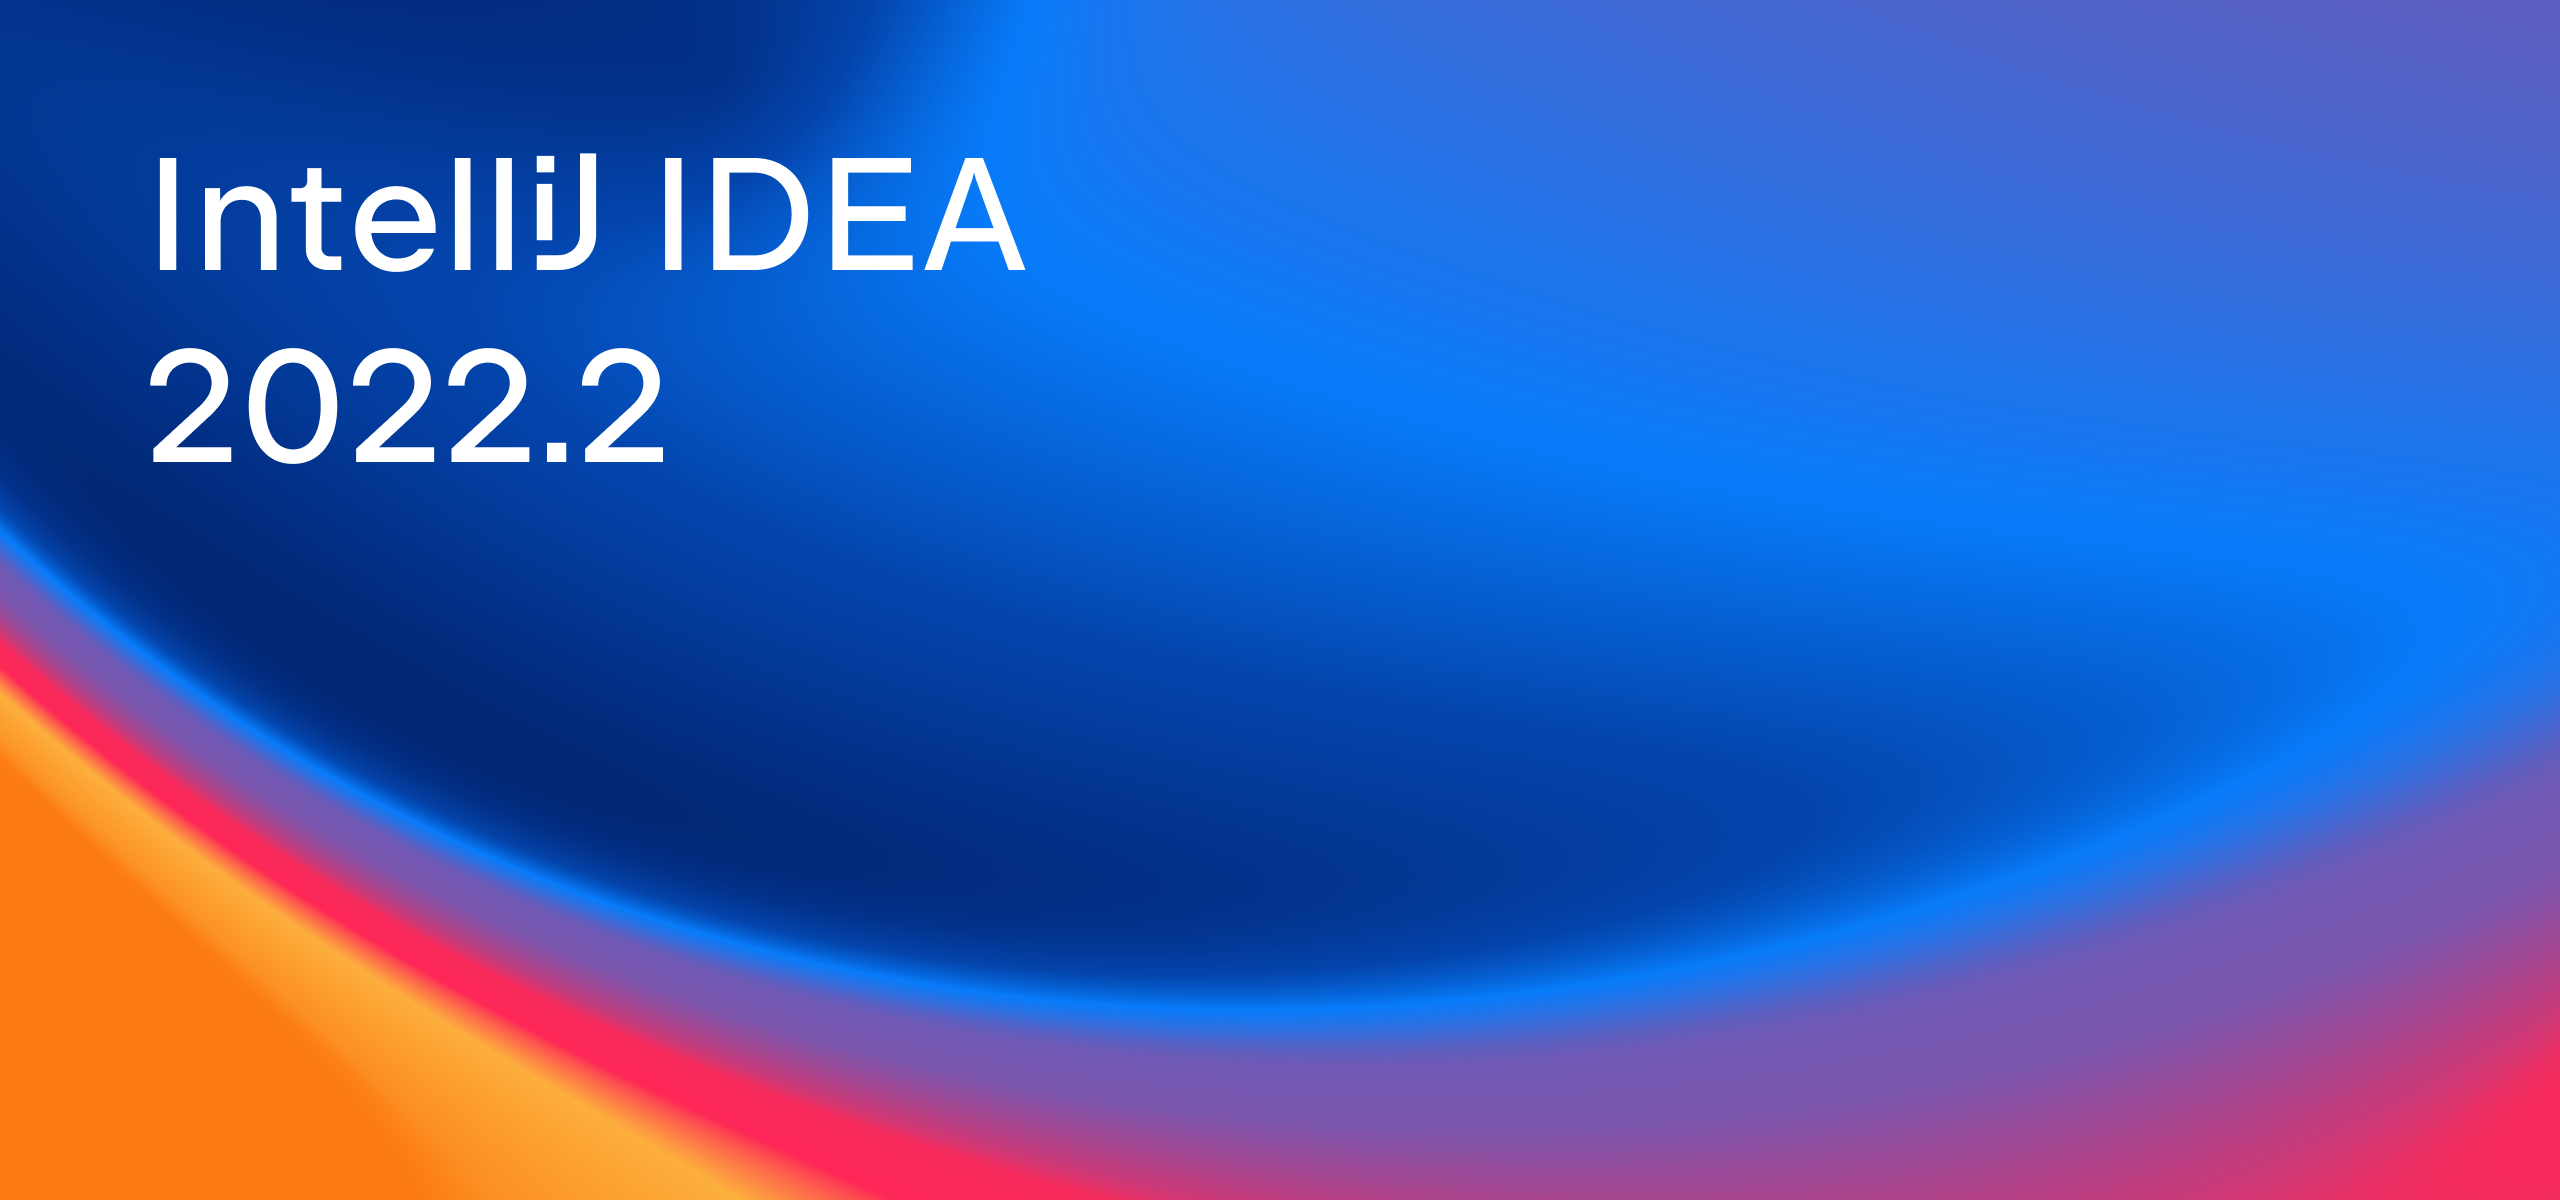 IntelliJ-IDEA-2022-2-release